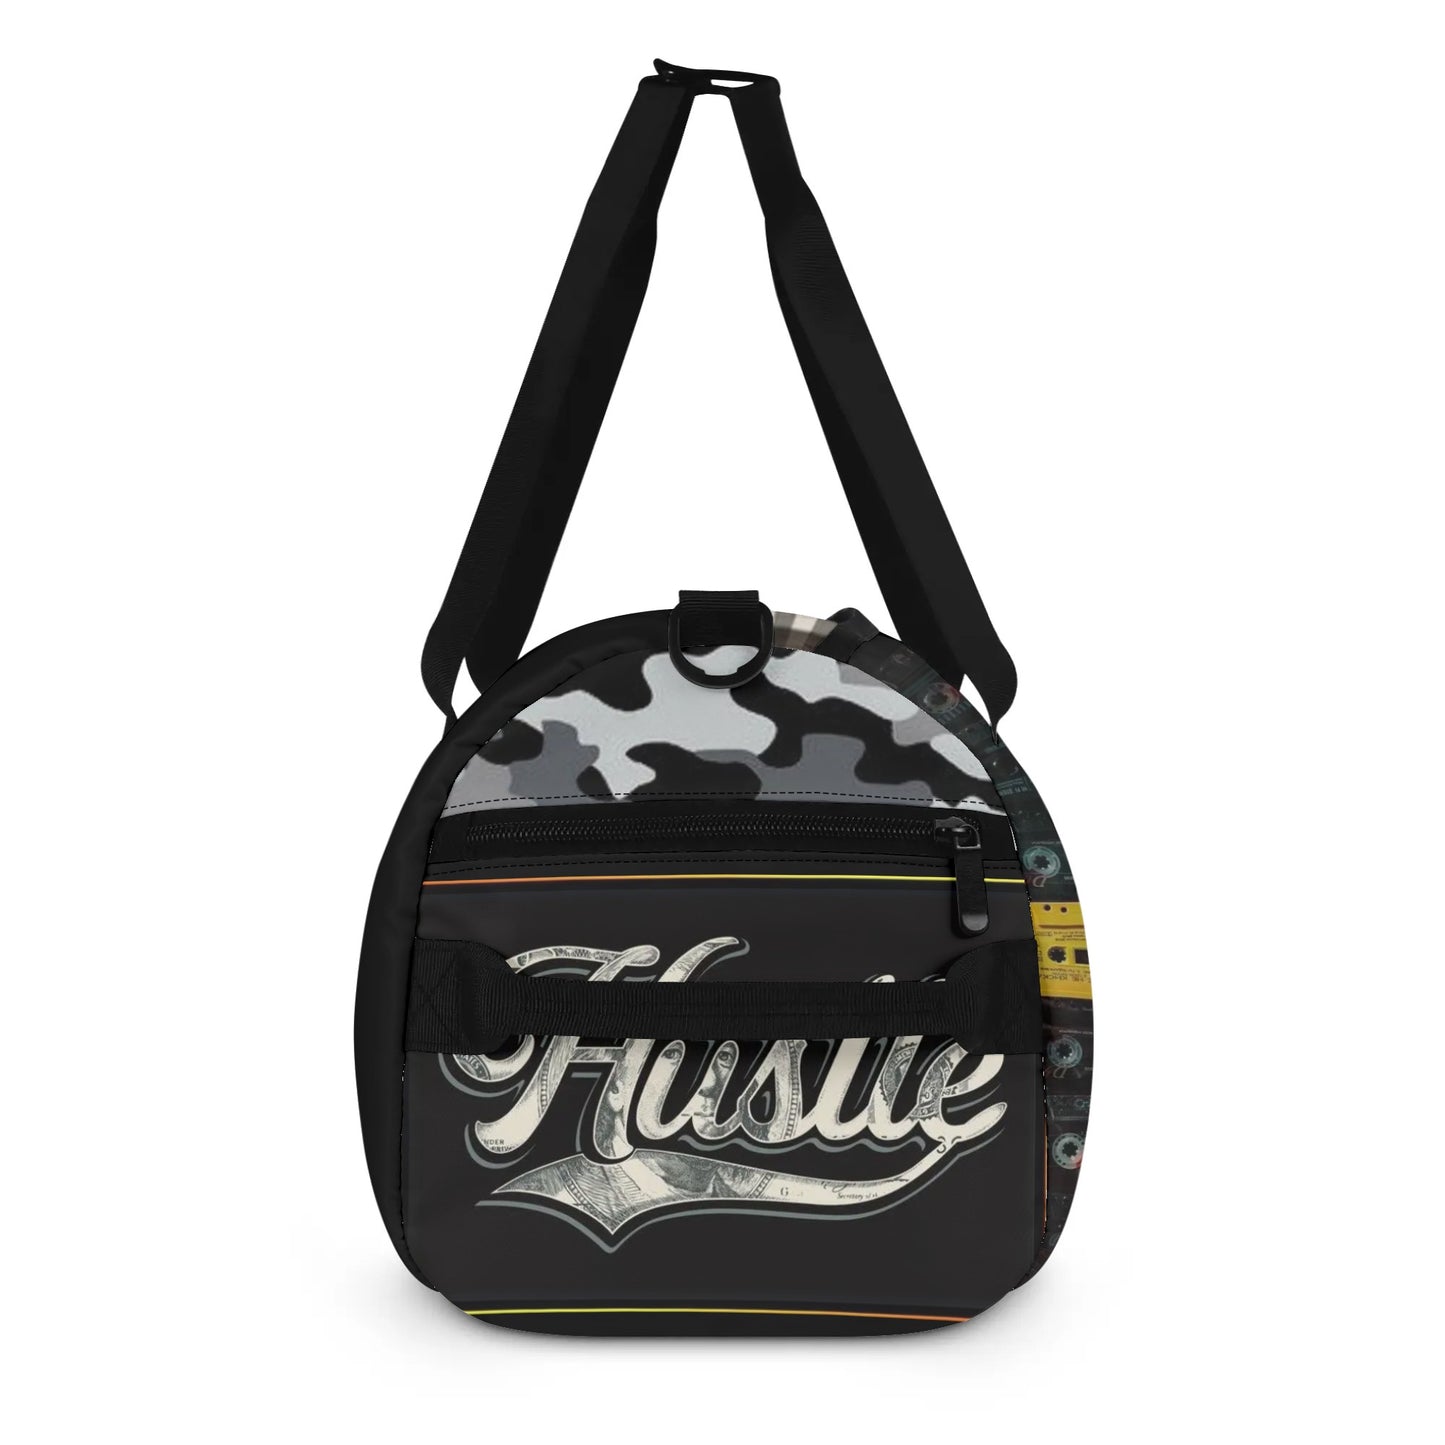 DOPiFiED Hustle Fashion Sports Luggage Bag Gym & Duffle Bag